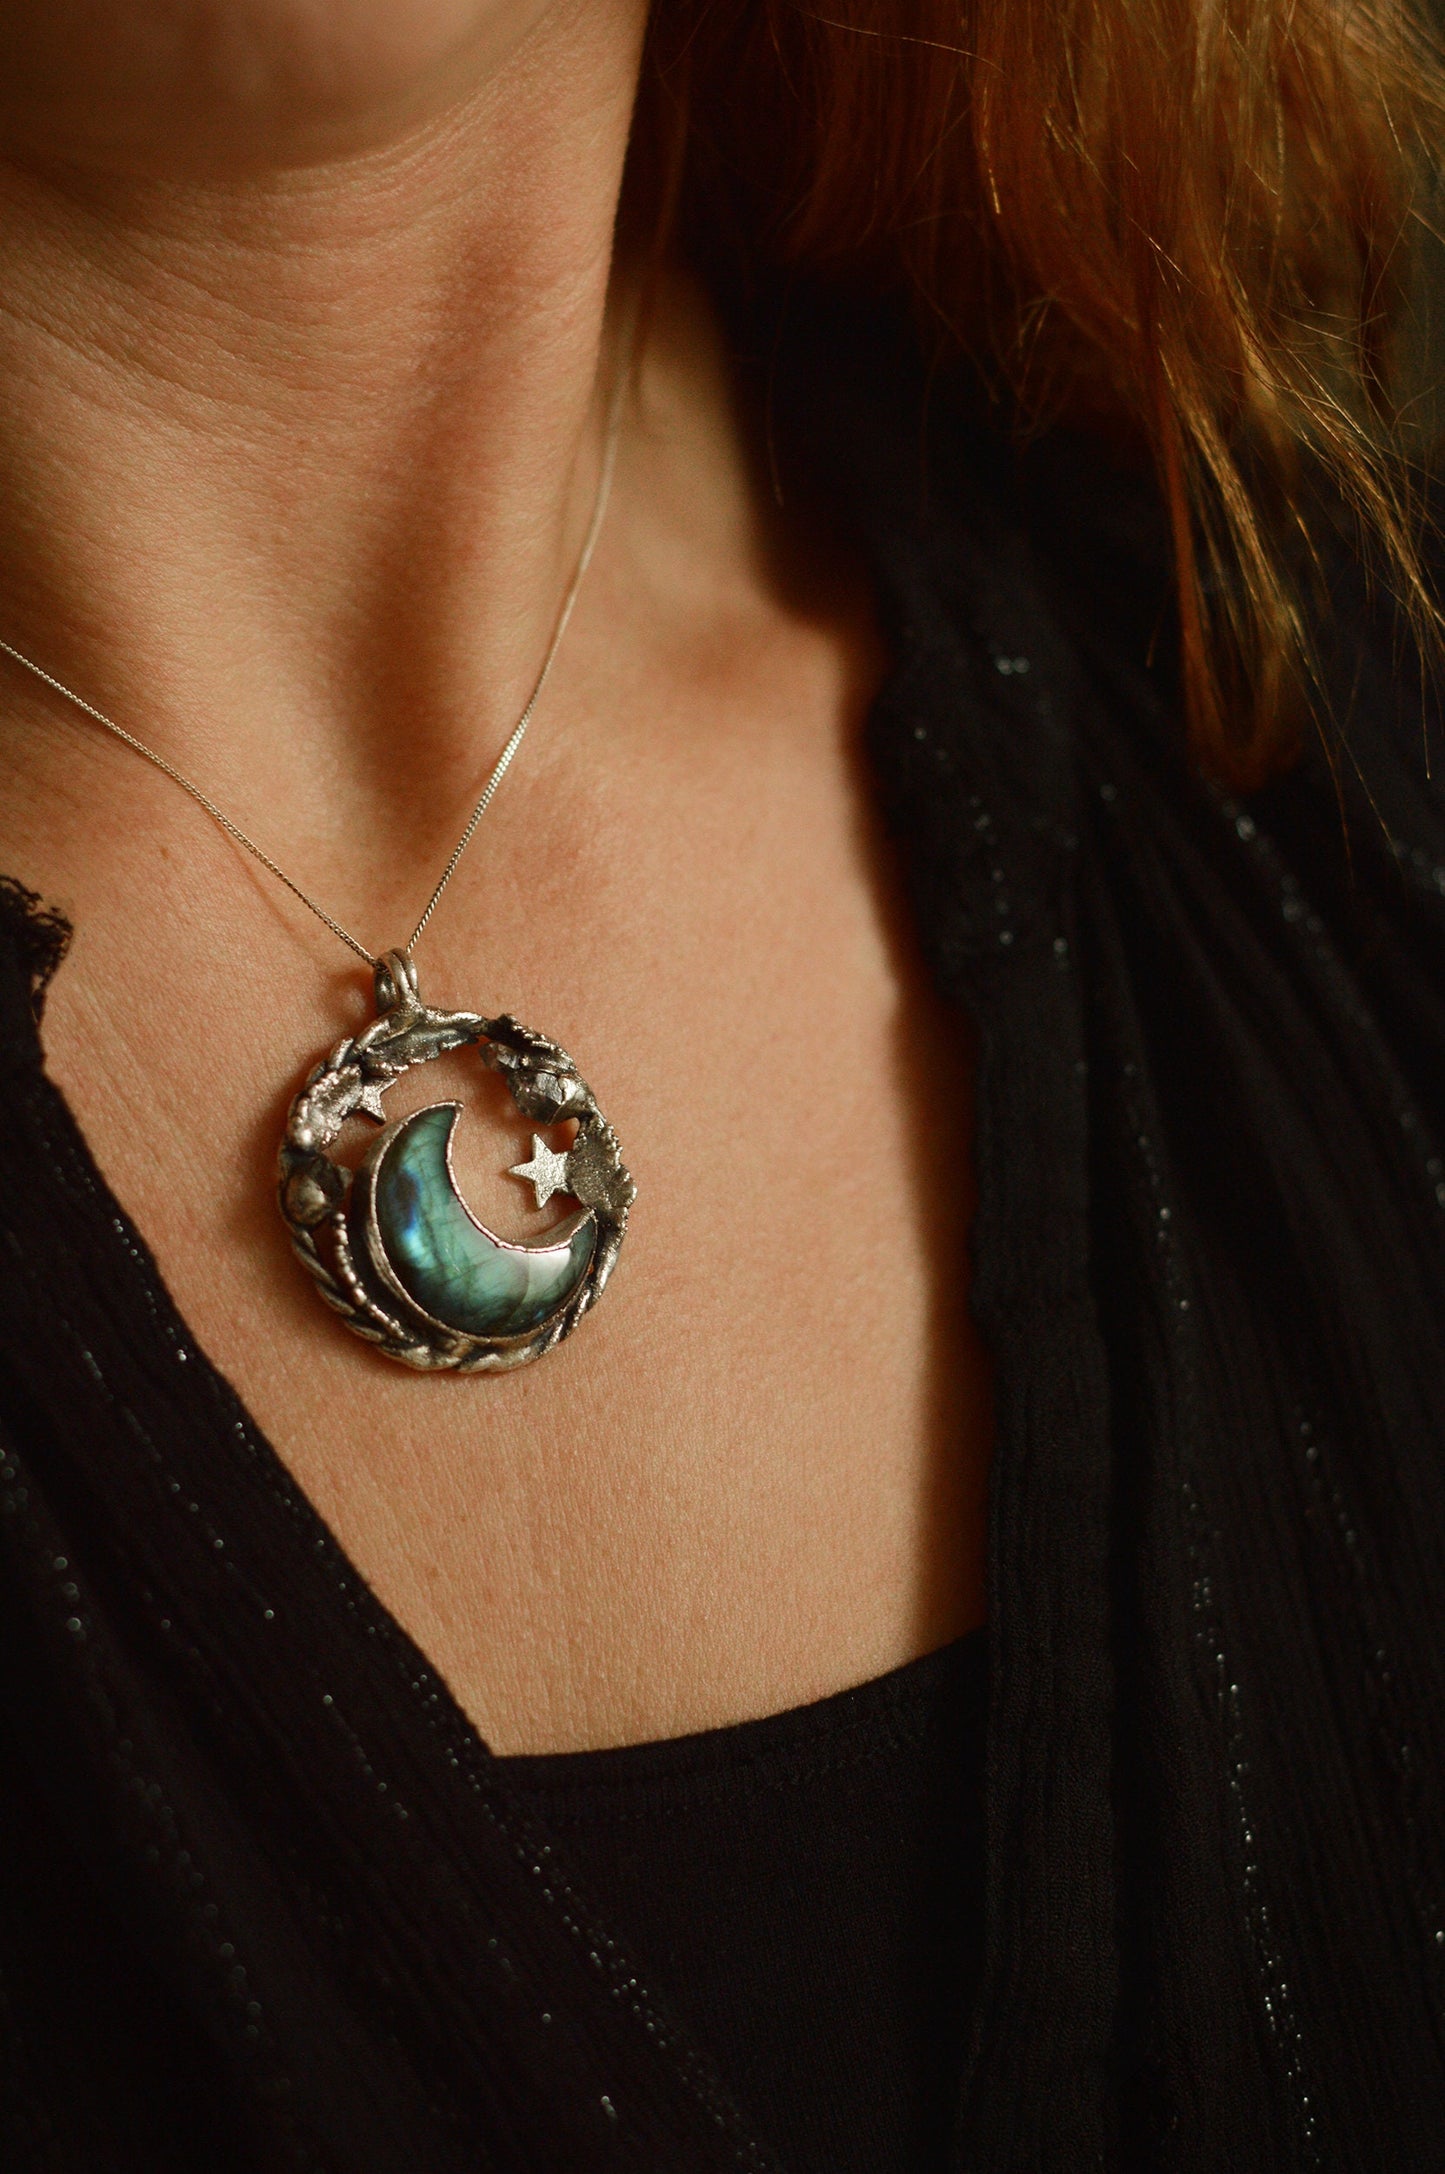 Harvest.3 collection - 'Sunset' labradorite pendant with botanical elements, enchanted woodland necklace